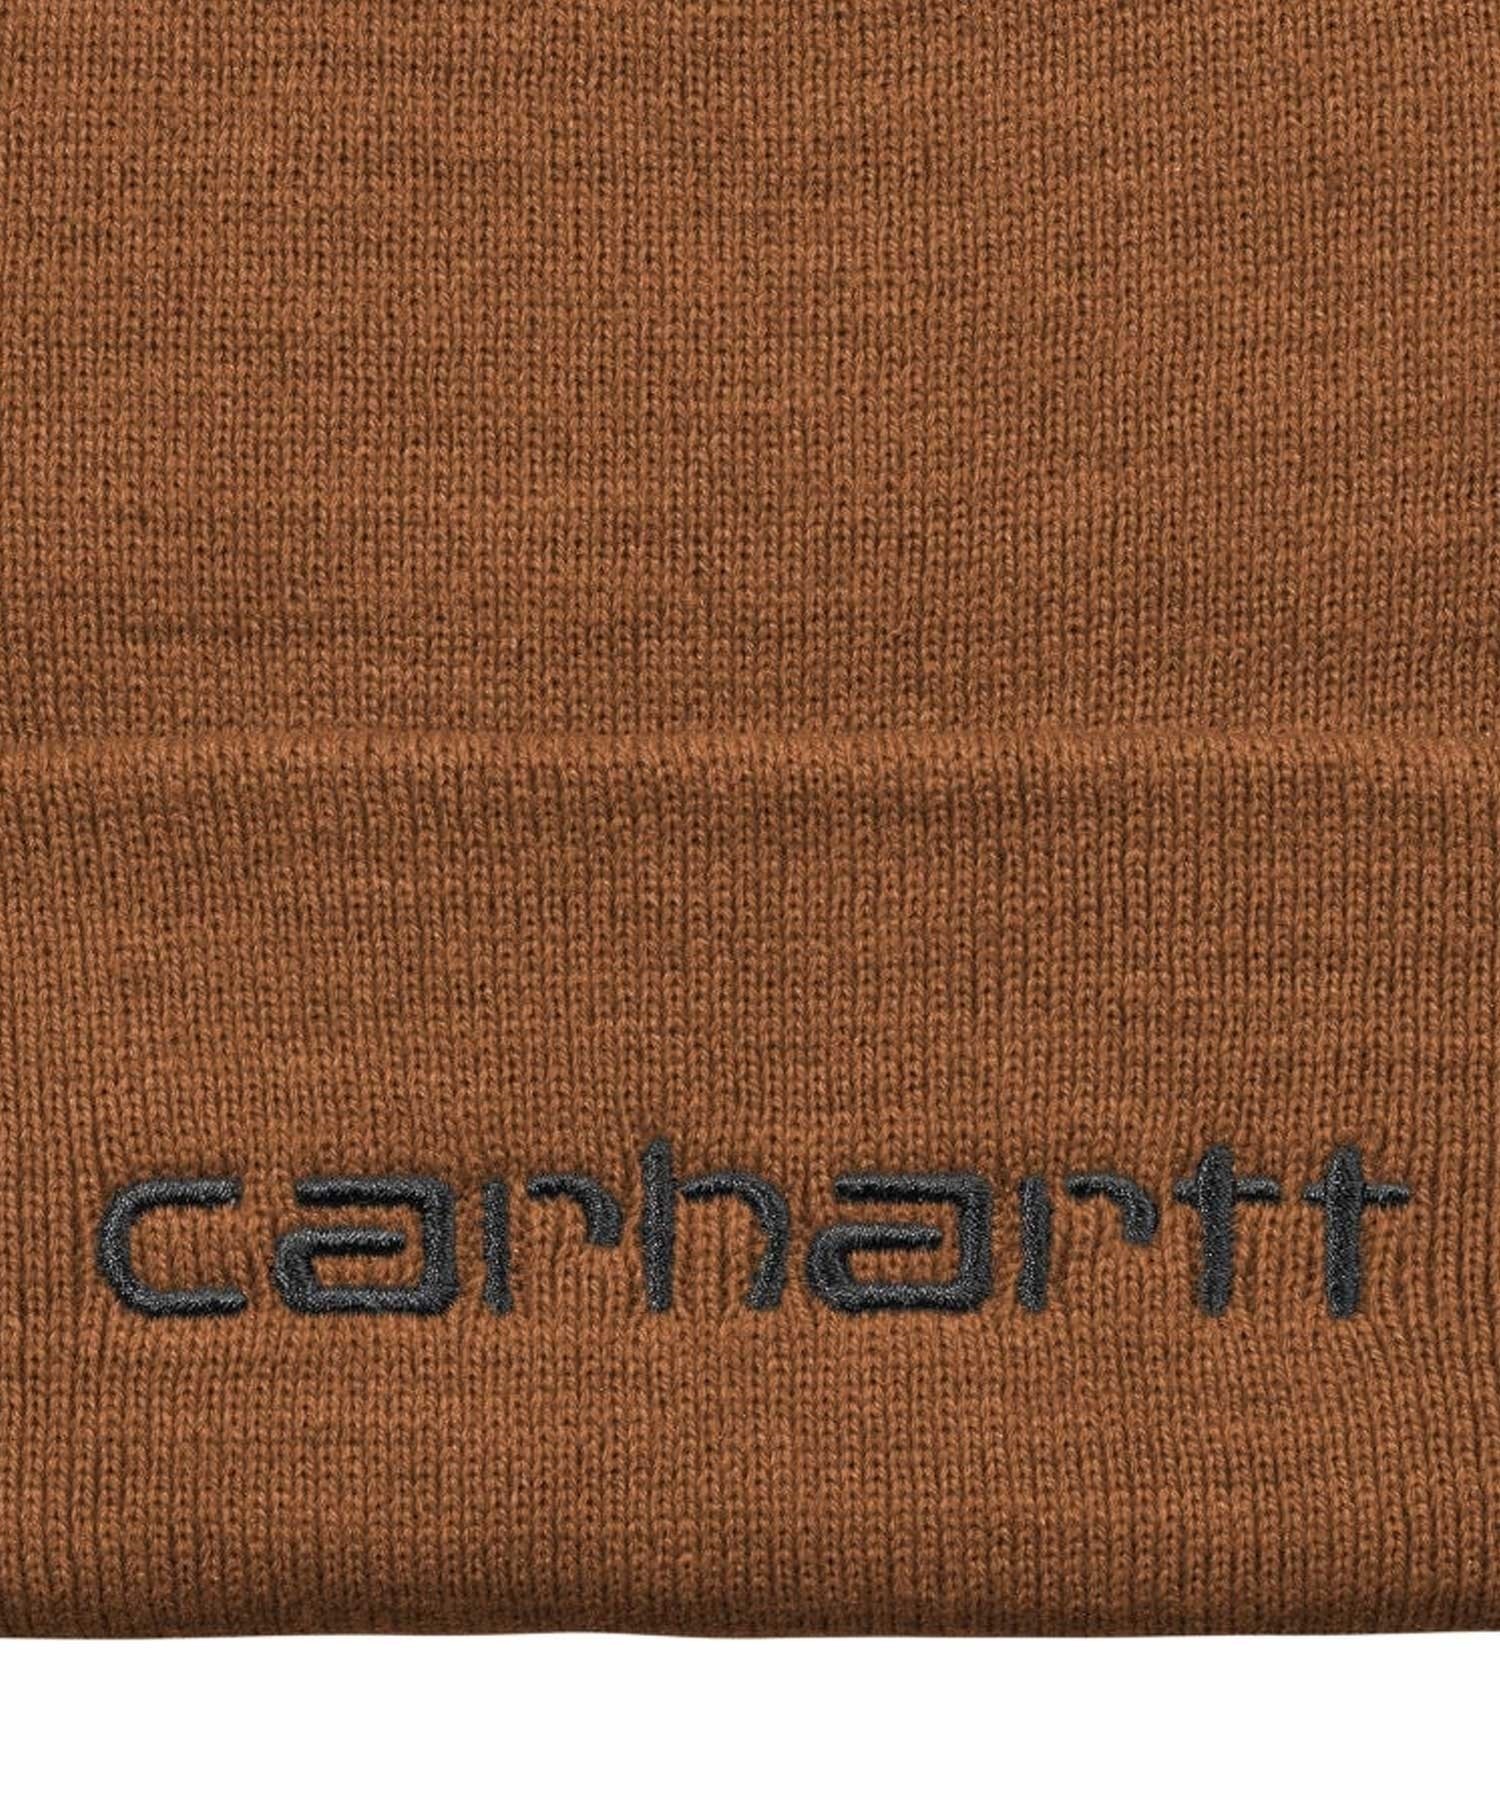 Carhartt/カーハート ビーニー ニット帽 ダブル SCRIPT BEANIE I030884(BR/BK-FREE)